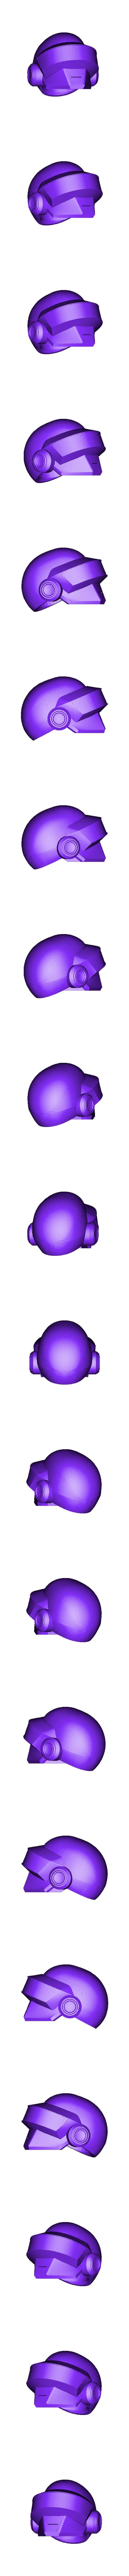 visorMask.Angled.stl Download free STL file Thomas Bangalter's Daft Punk Helmet • 3D printing design, AlbertKhan3D